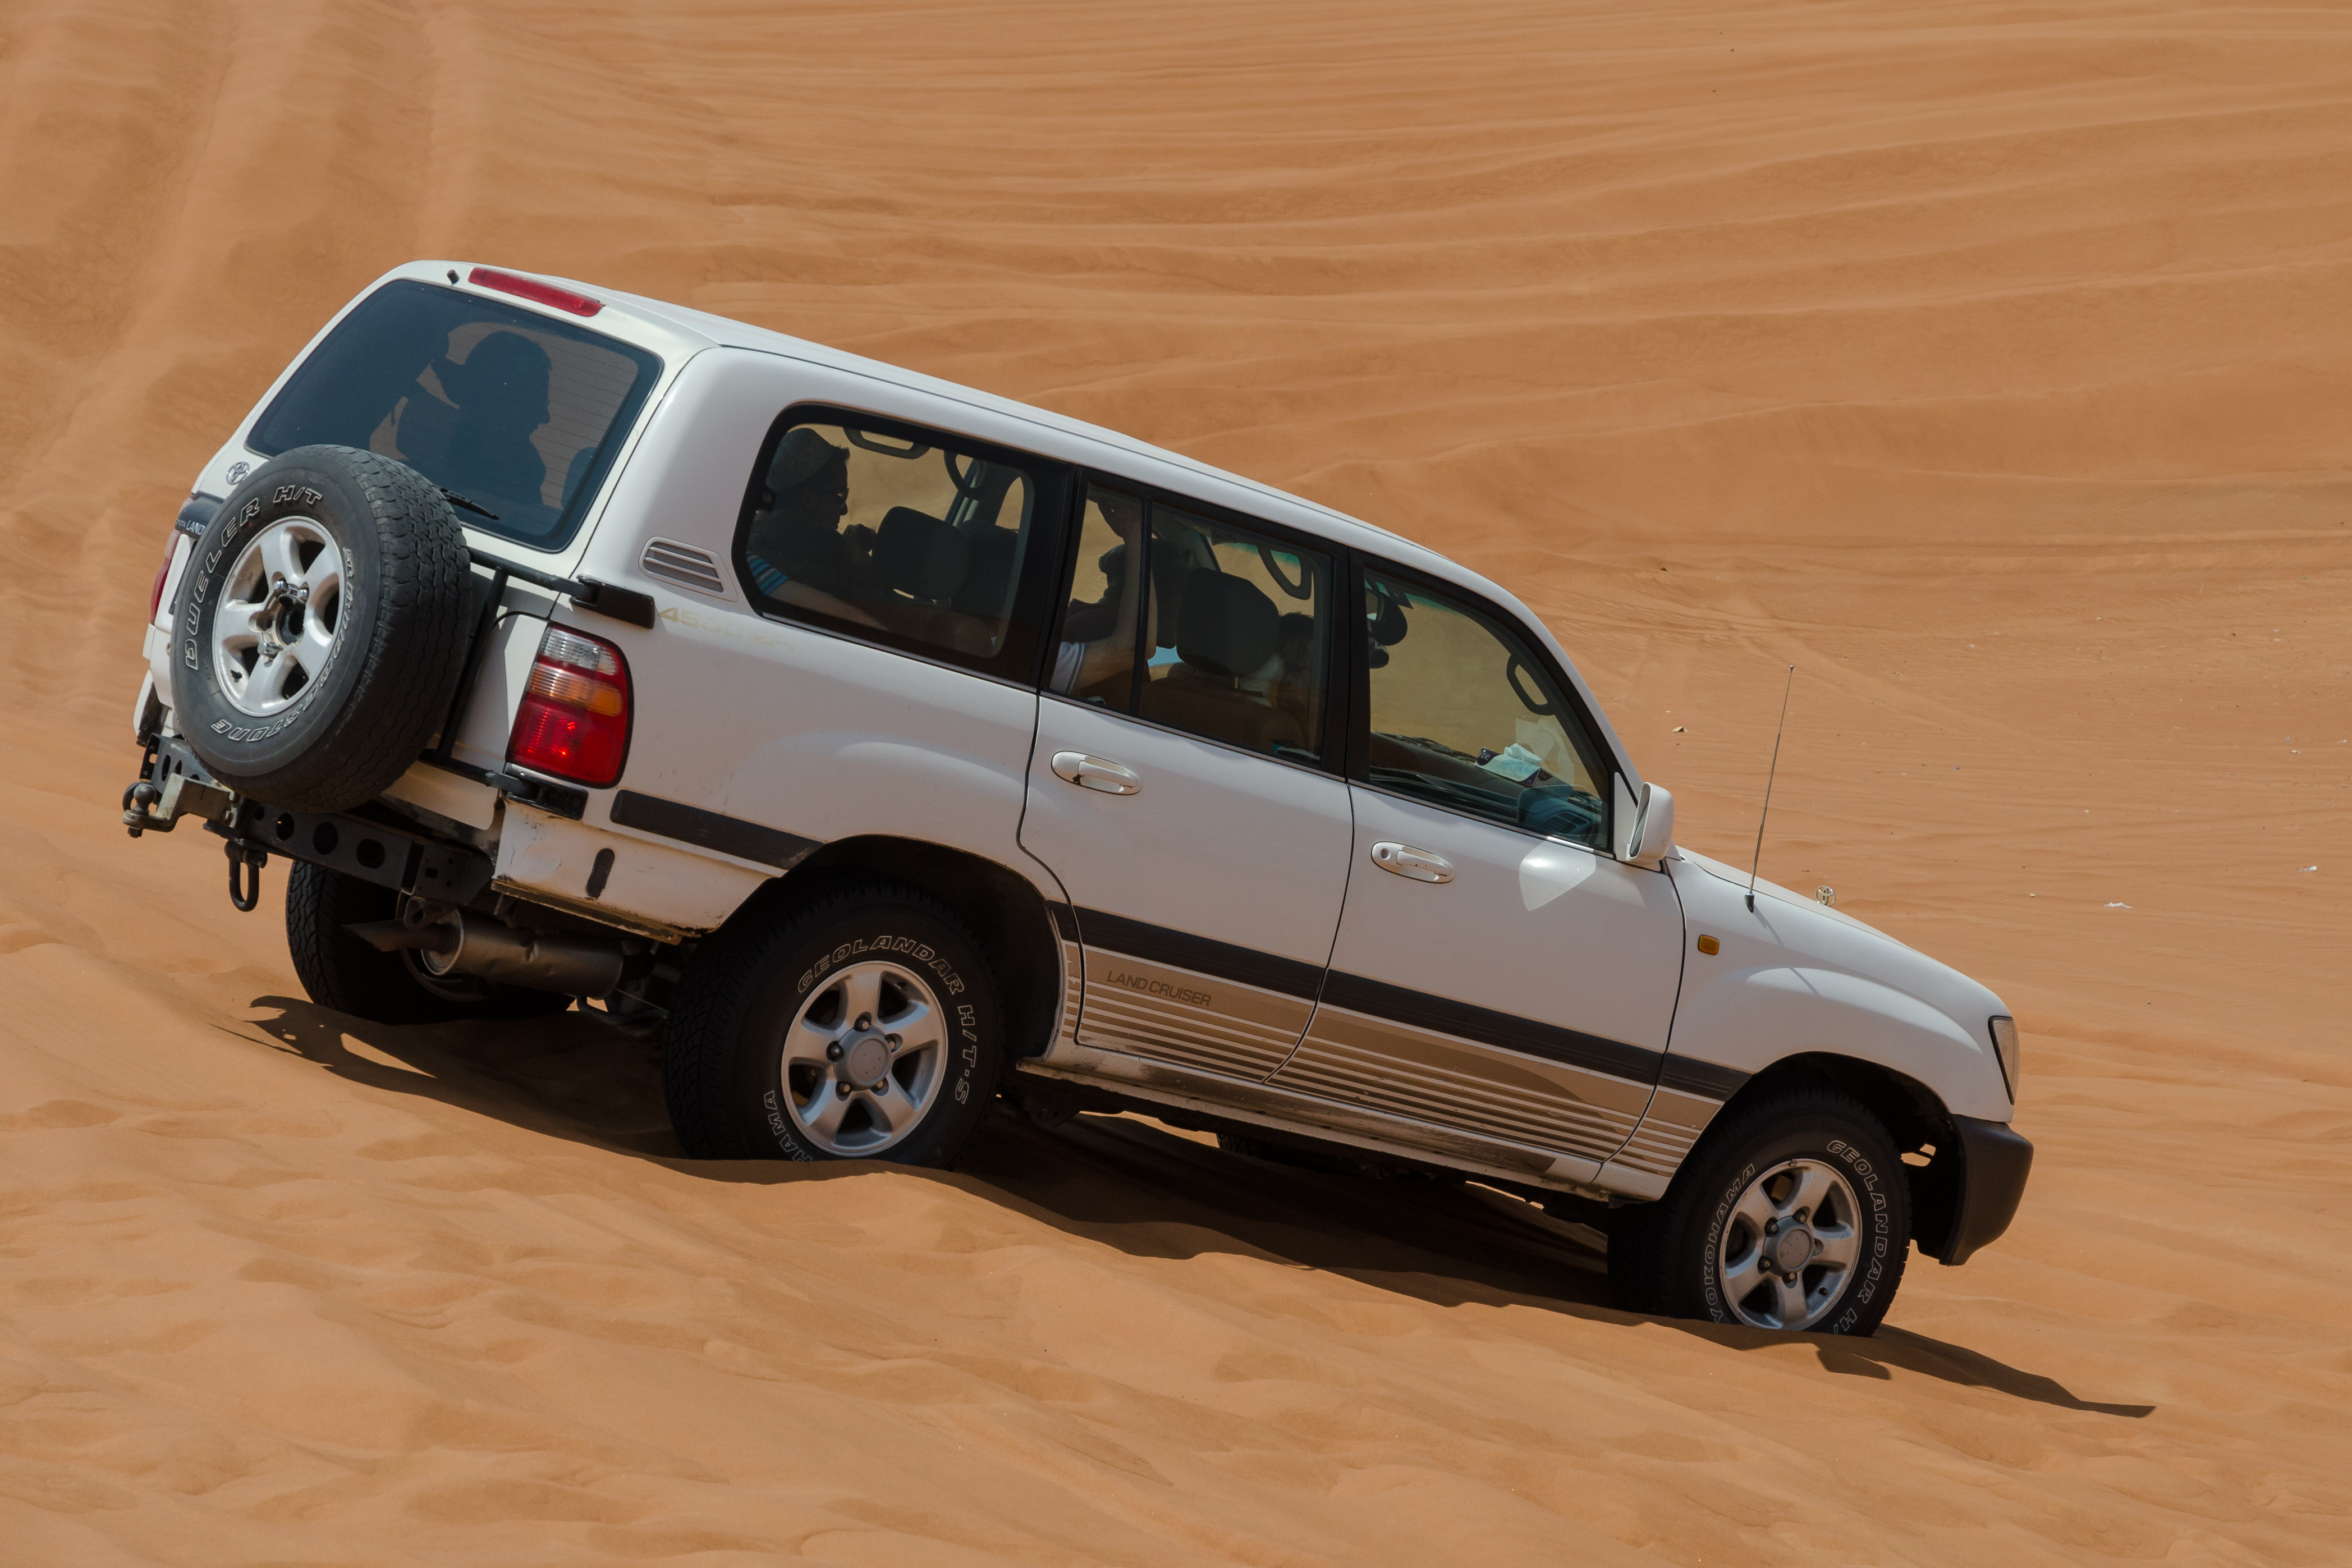 Toyota Land Cruiser in the Desert Side-Back View 20120409 1